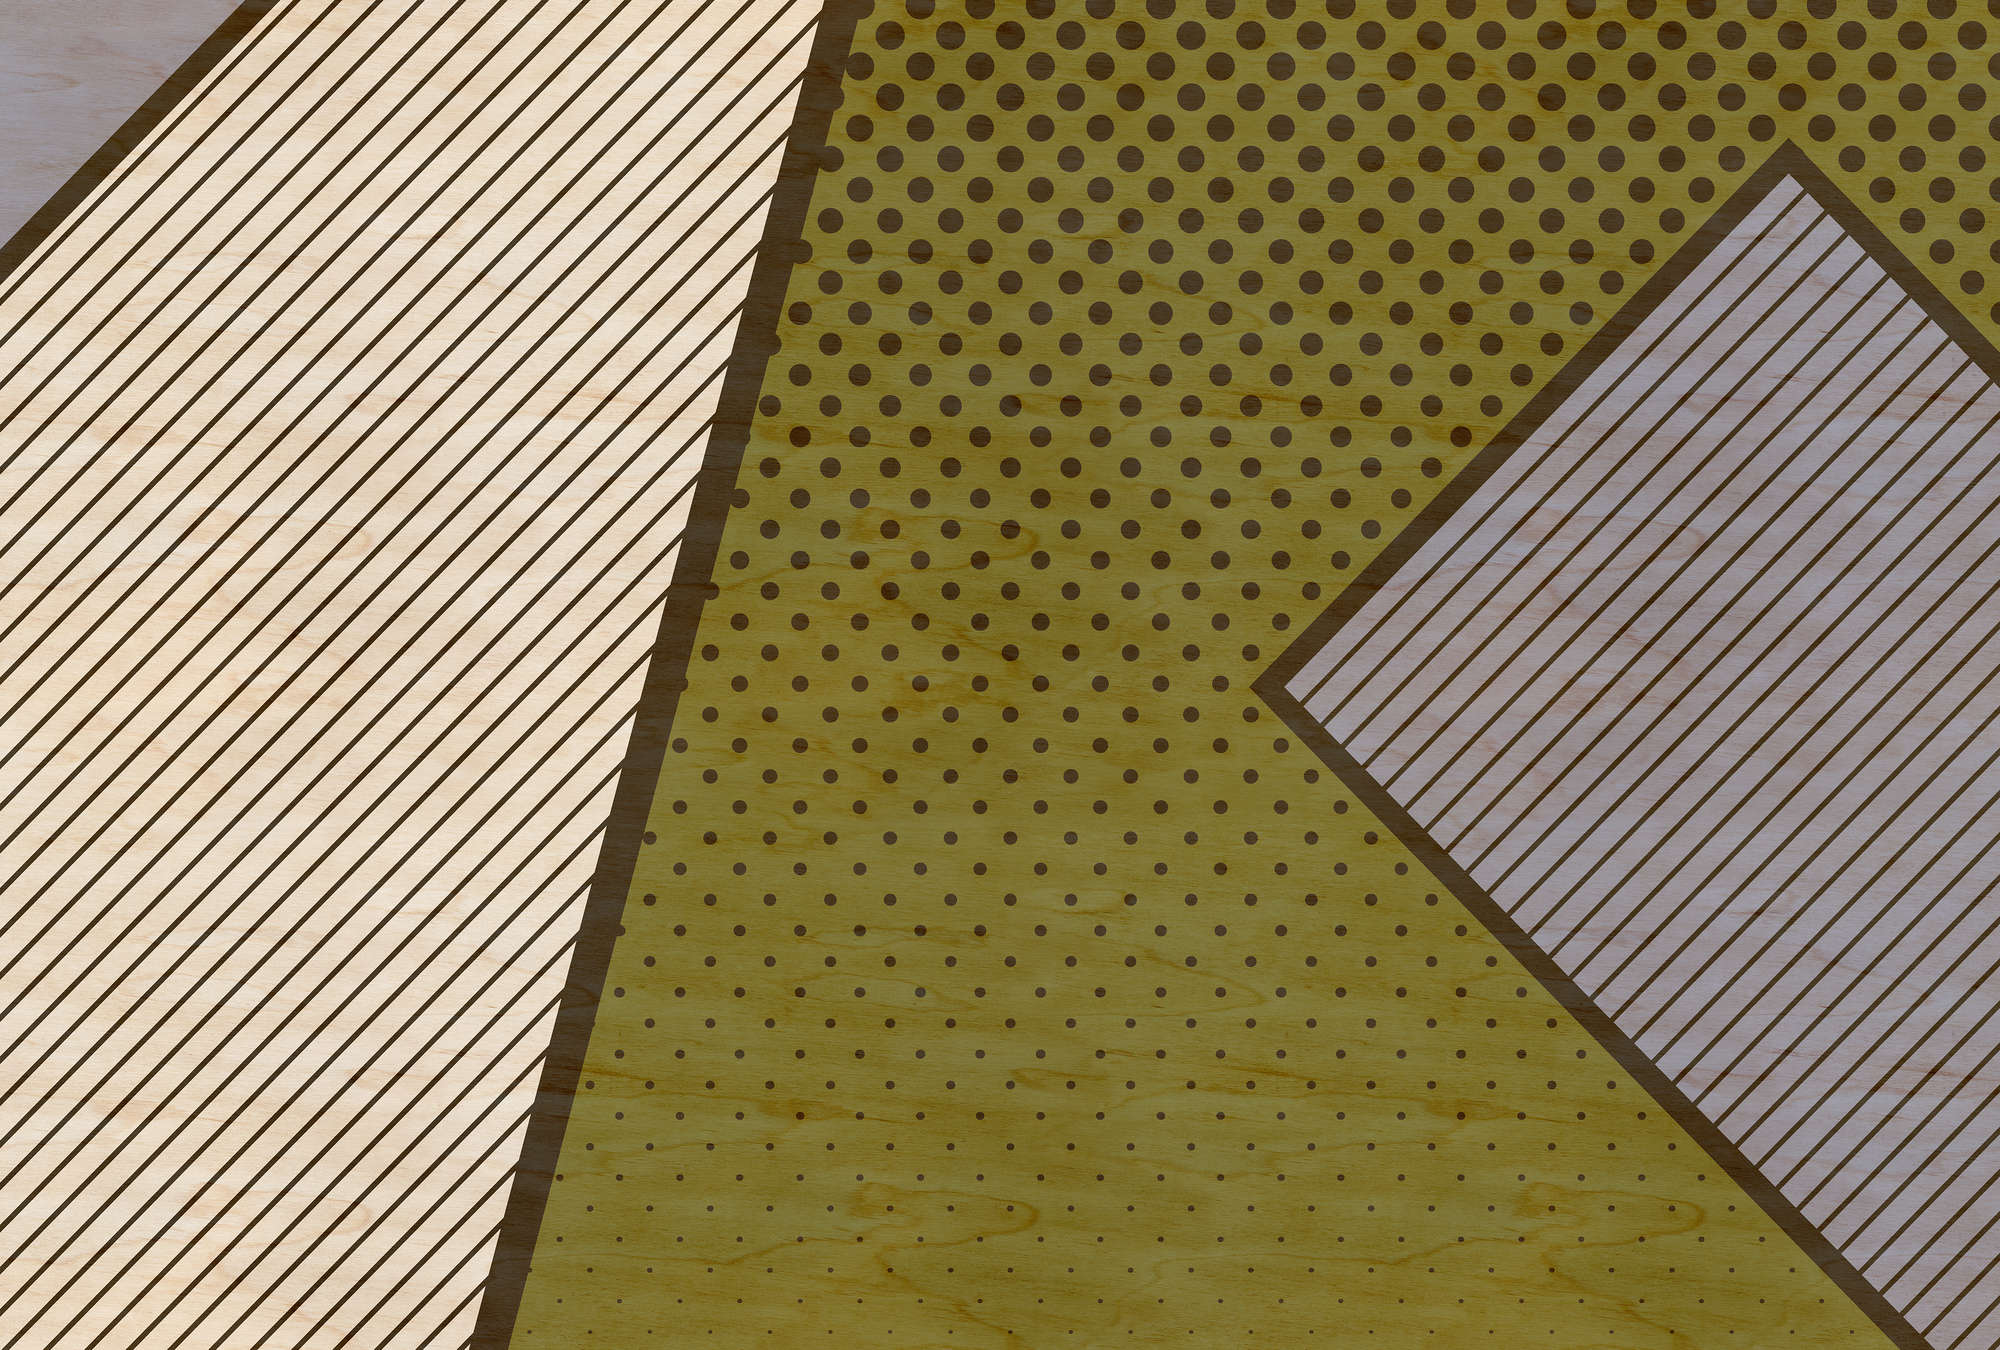             Bird gang 2 - Fototapete, modernes Muster im Pop Art Stil- Sperrholz Struktur – Beige, Gelb | Mattes Glattvlies
        